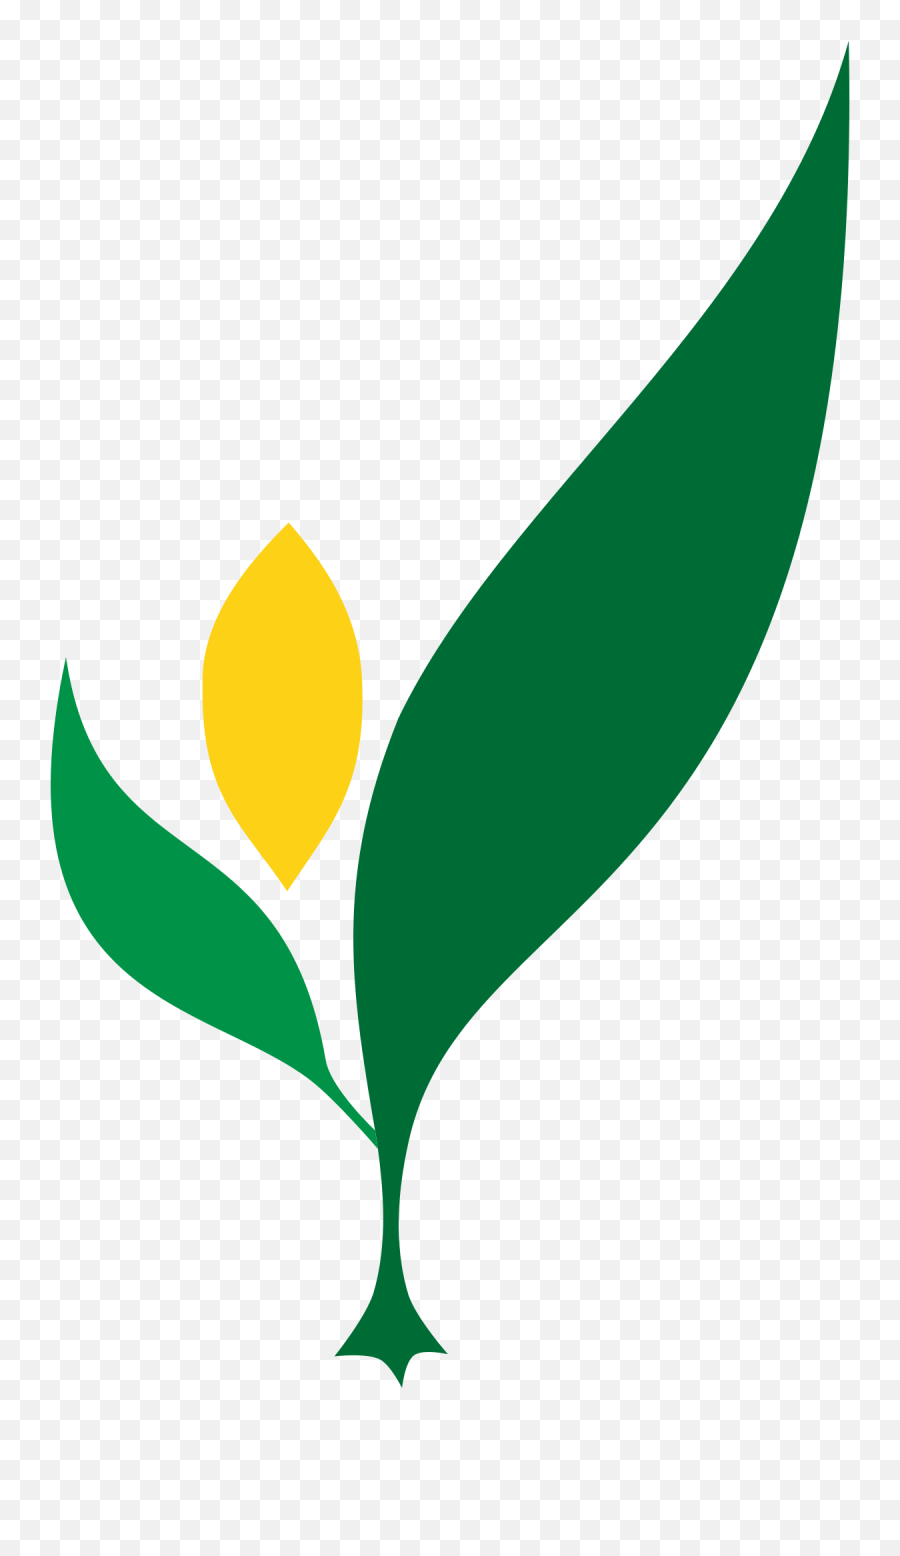 Bureau Of Plant Industry Philippines - Wikipedia Bureau Of Plant Industry Logo Png,Planting Png